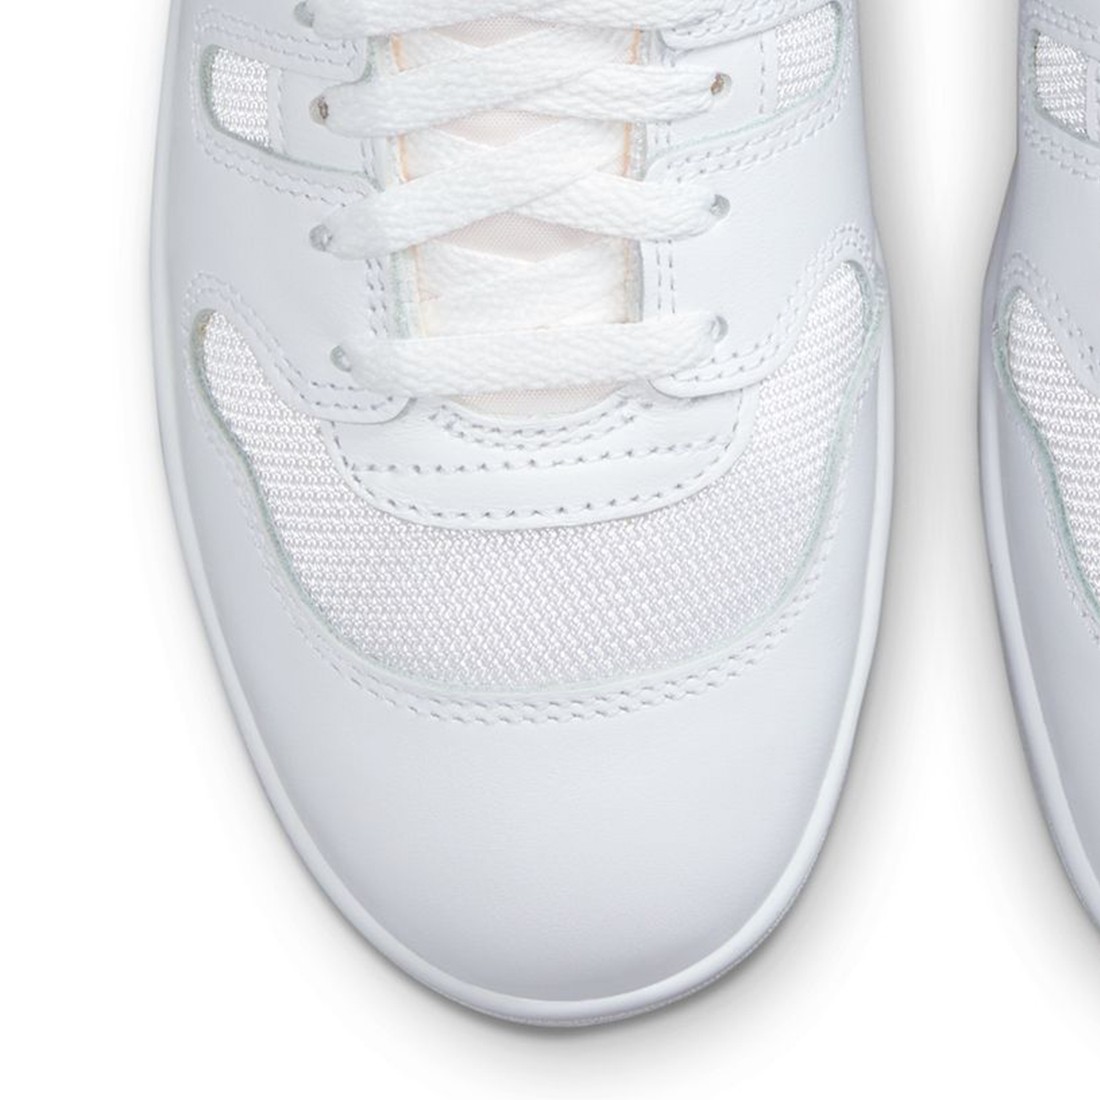 The Air Jordan 3 SE will drop at Nike on